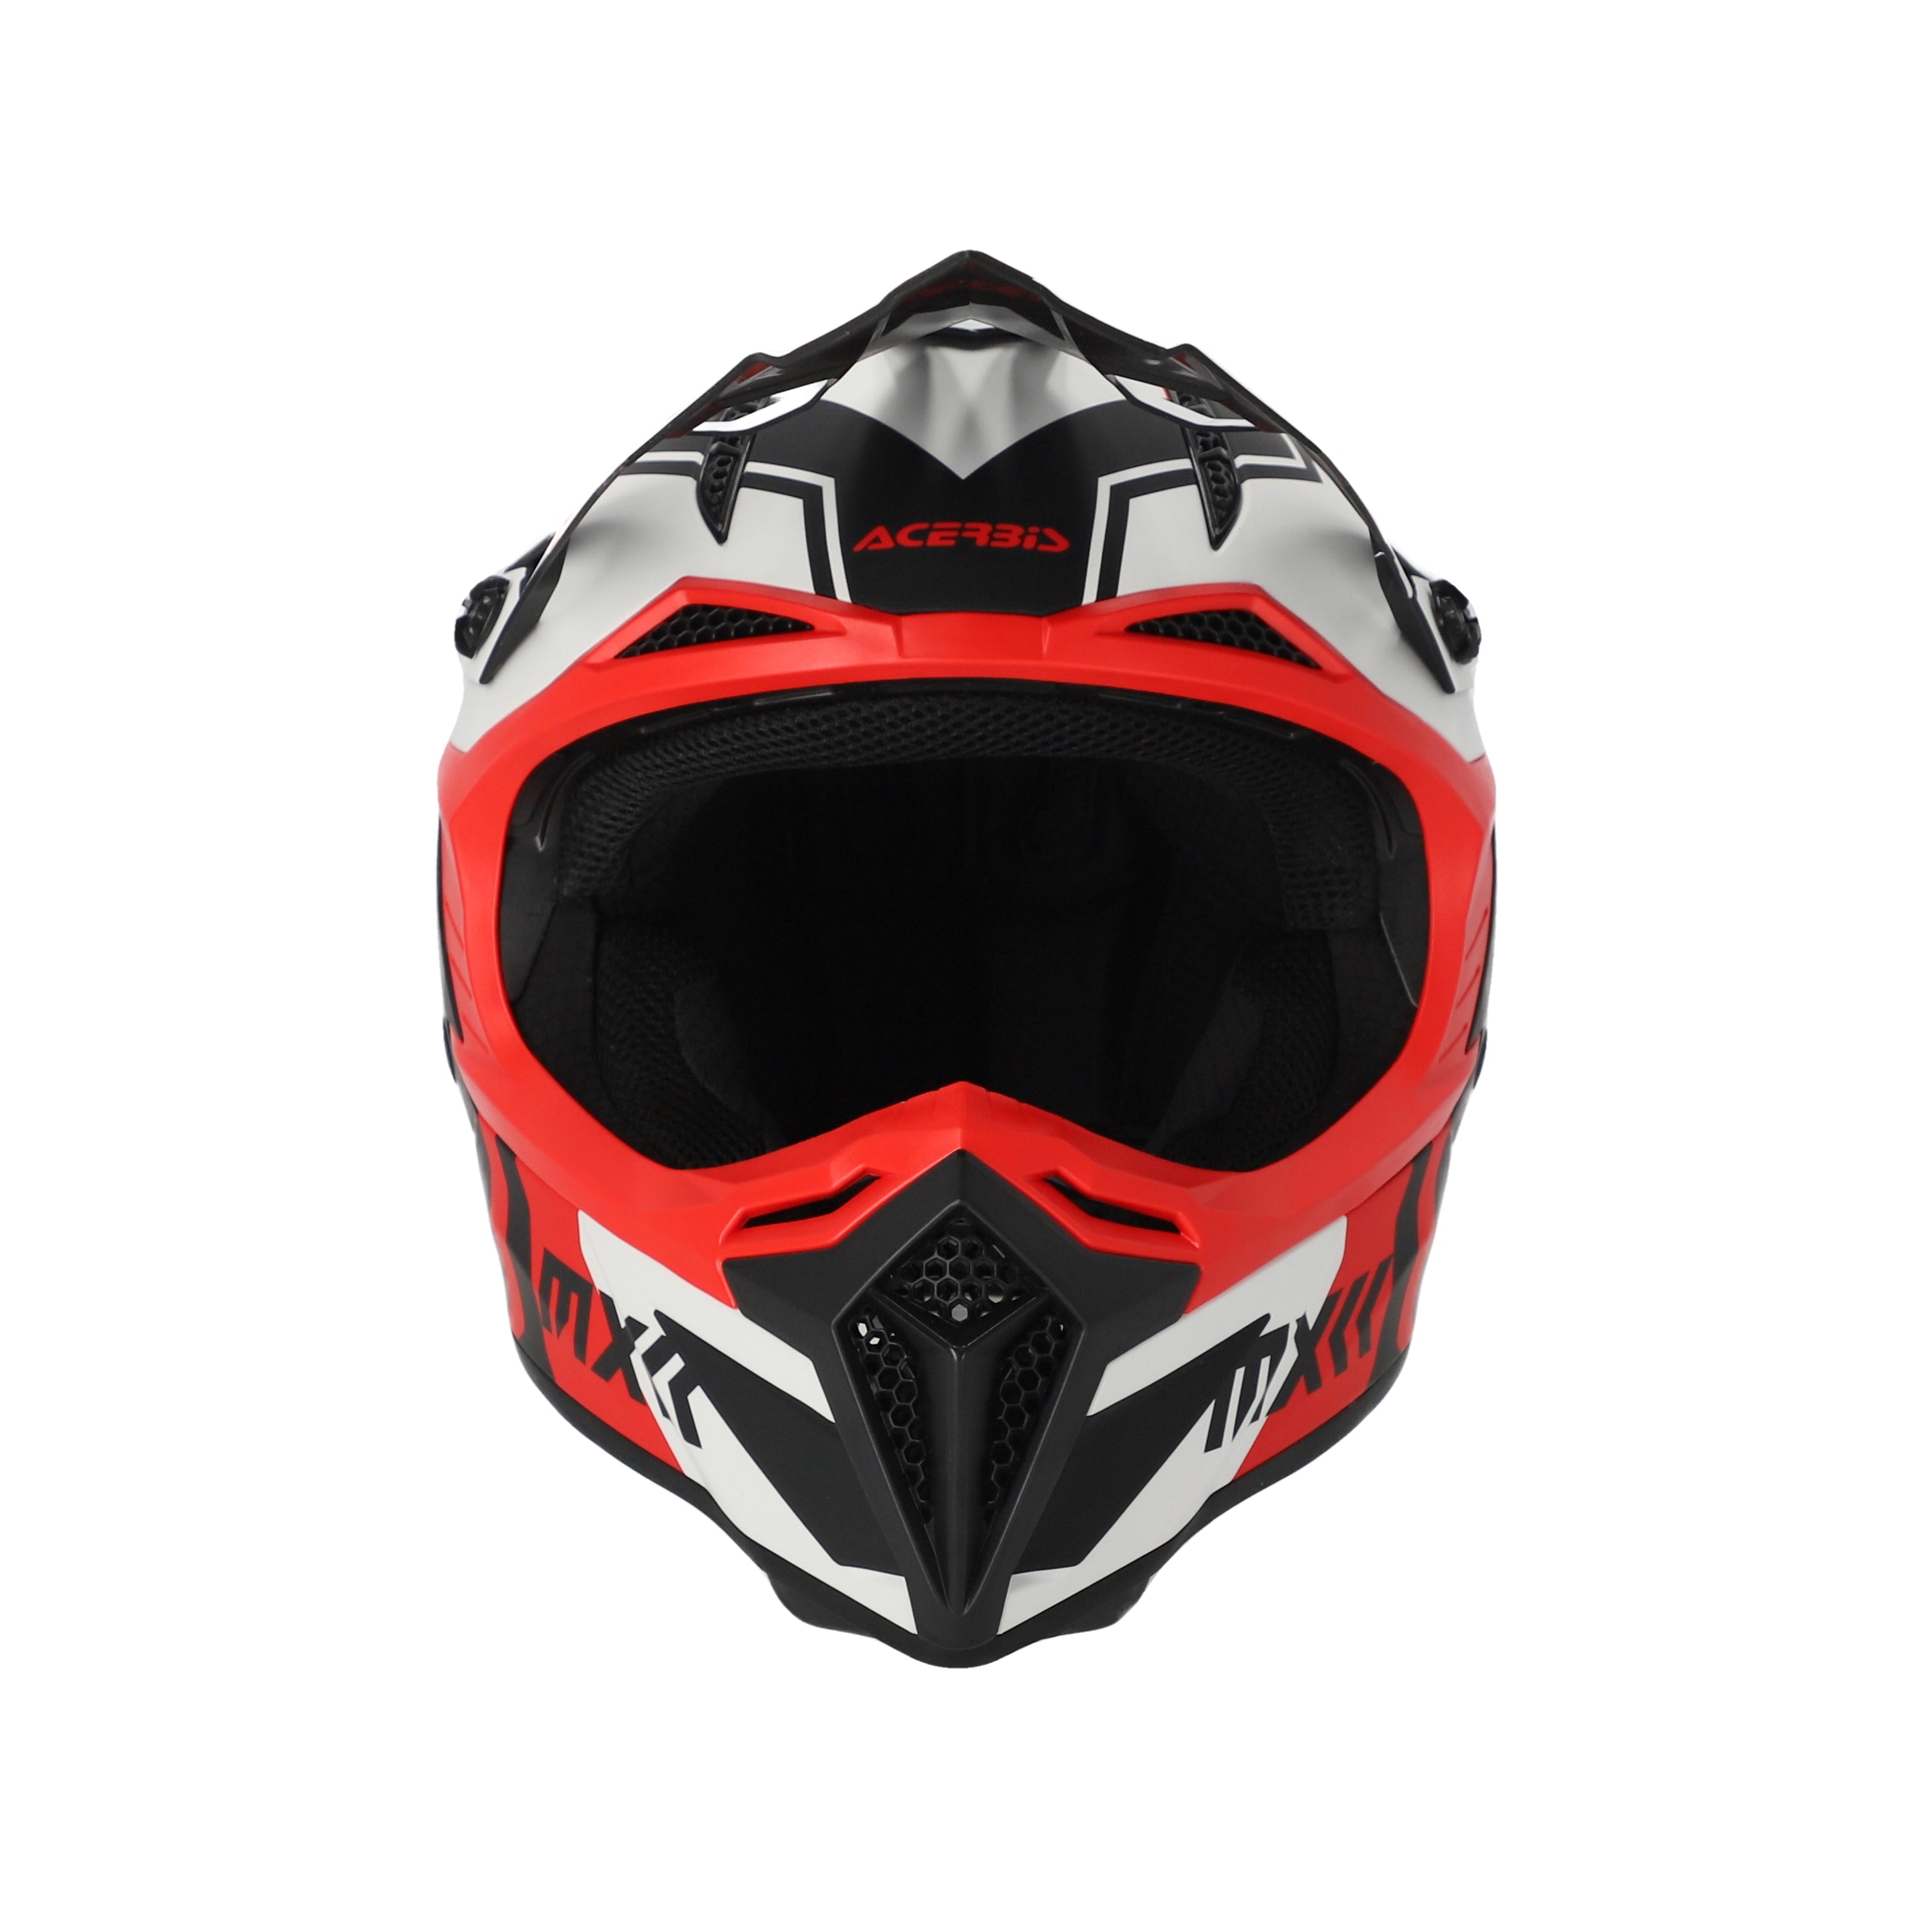 Acerbis Profile 5 MX Helmet Matte White/Red